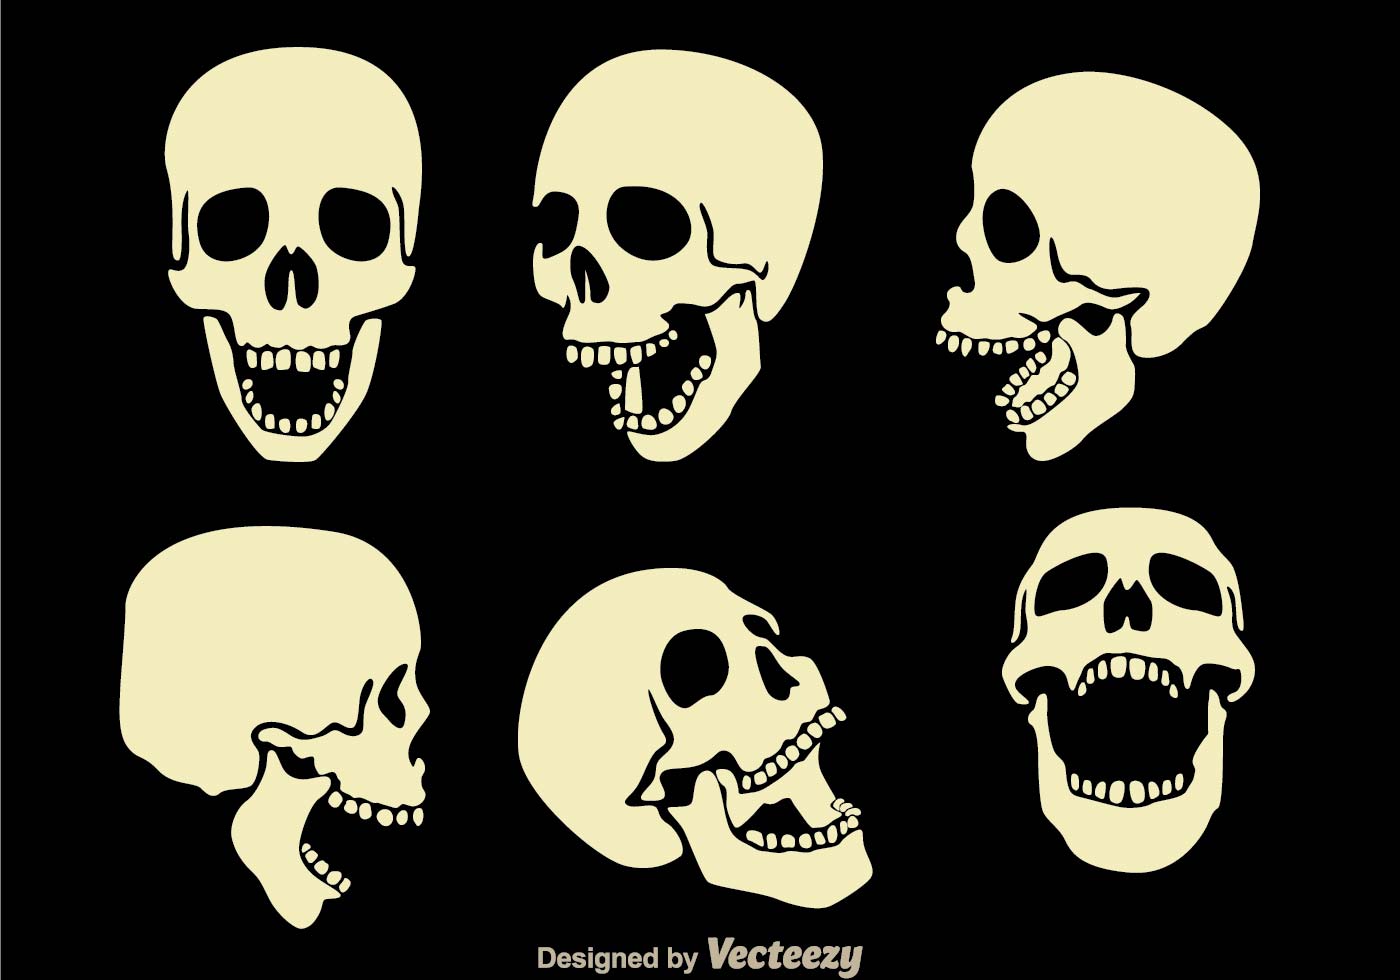 Skull Vectors Free Vector Art, Stock Graphics & Image